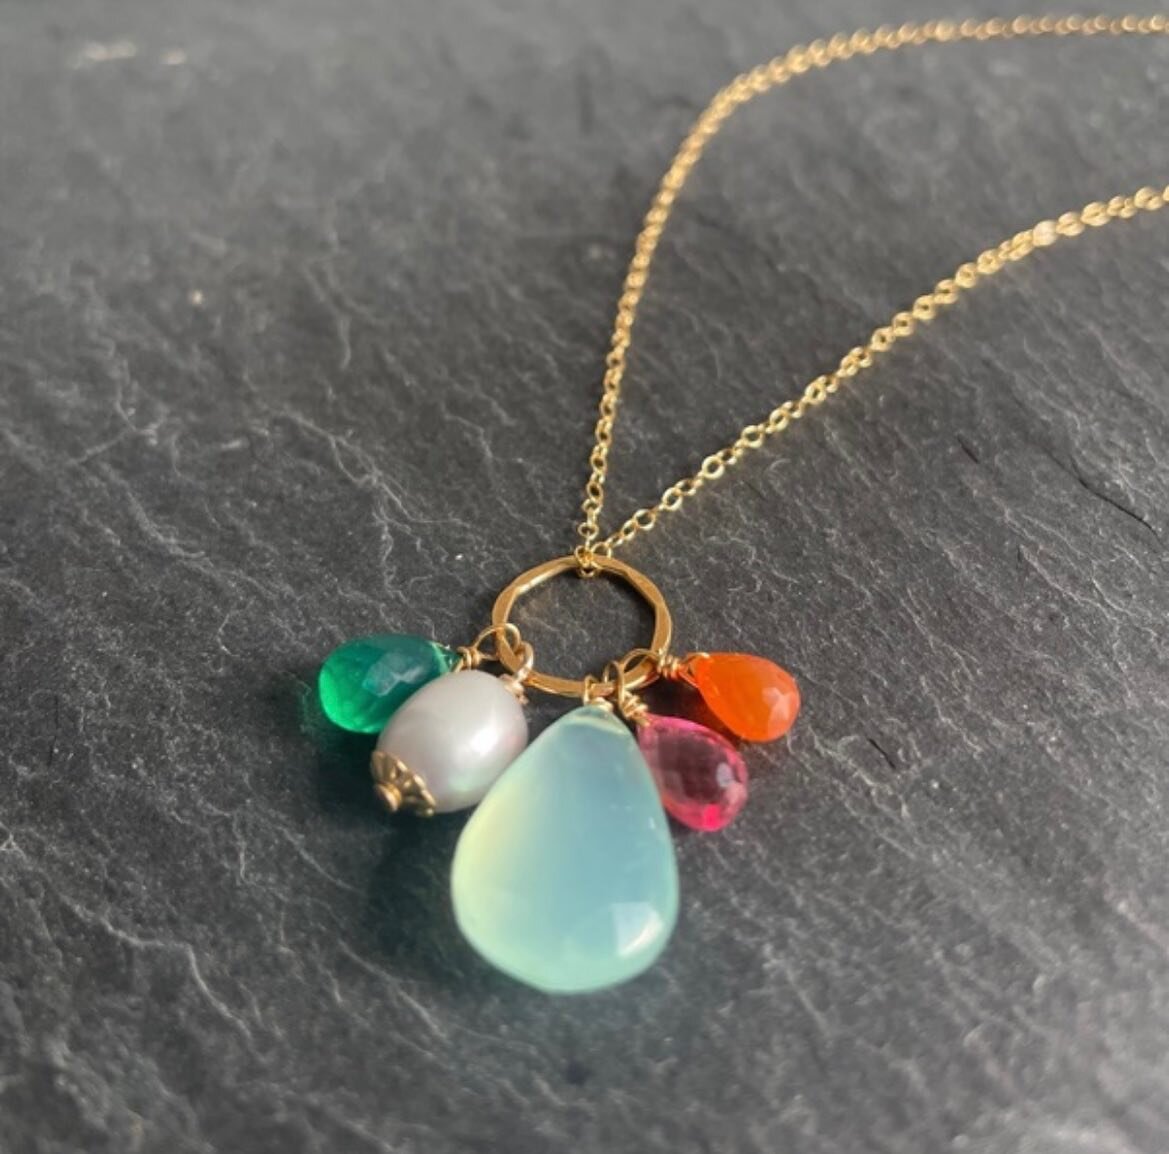 Happy 2023 😊 here&rsquo;s a new Aventurine drop necklace available on my website.
.
.
.
#handmadeuk #handmadejewelry #aventurine #madeinoxfordshire #jewellerymaker #naturalpearls #goldjewellerydesign